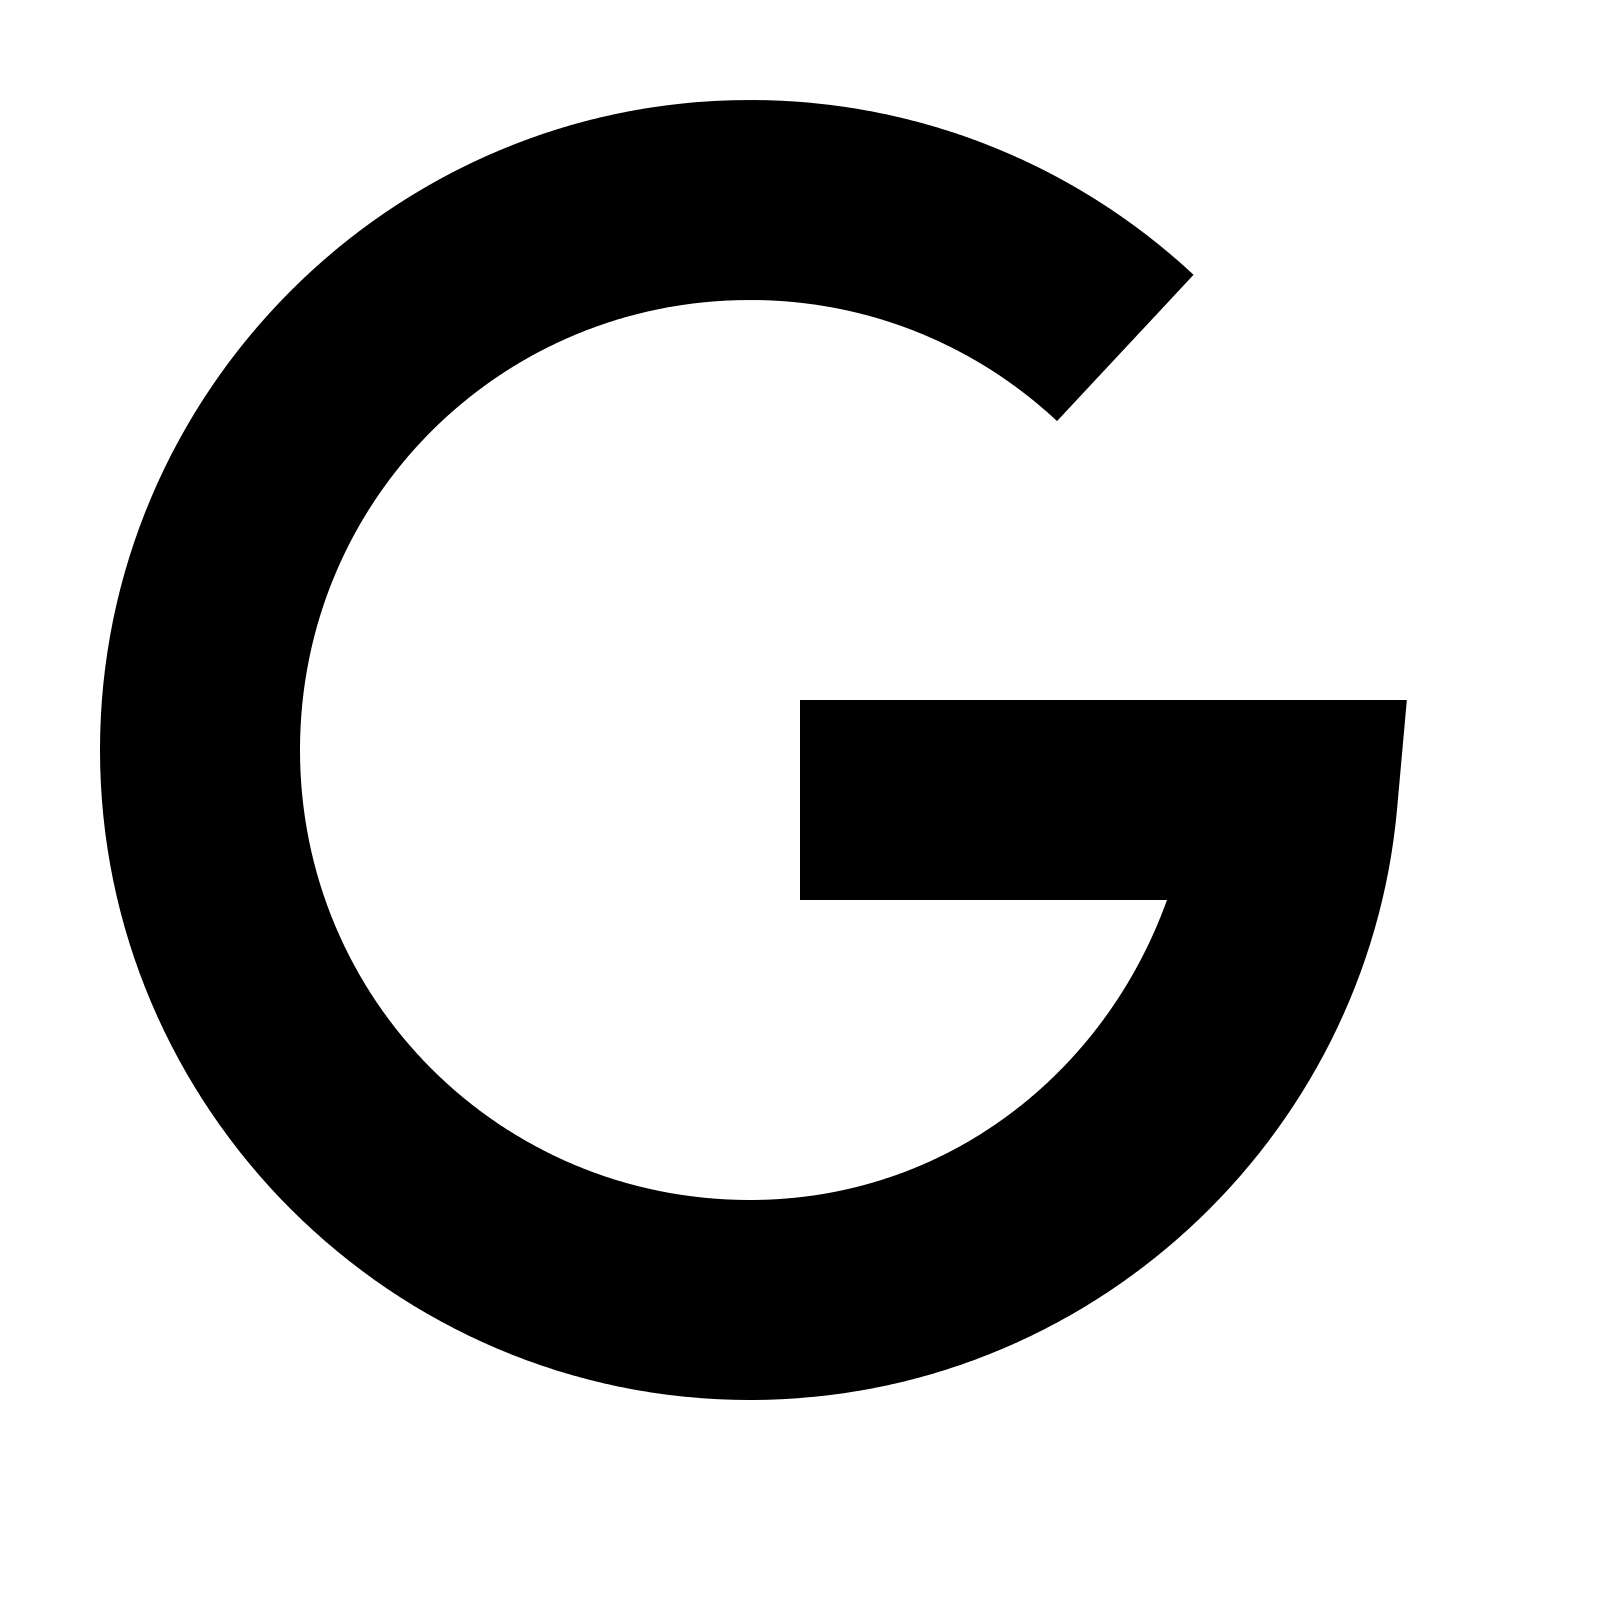 Black and White Google Logo - Black White Google 2017 Logo Png Image